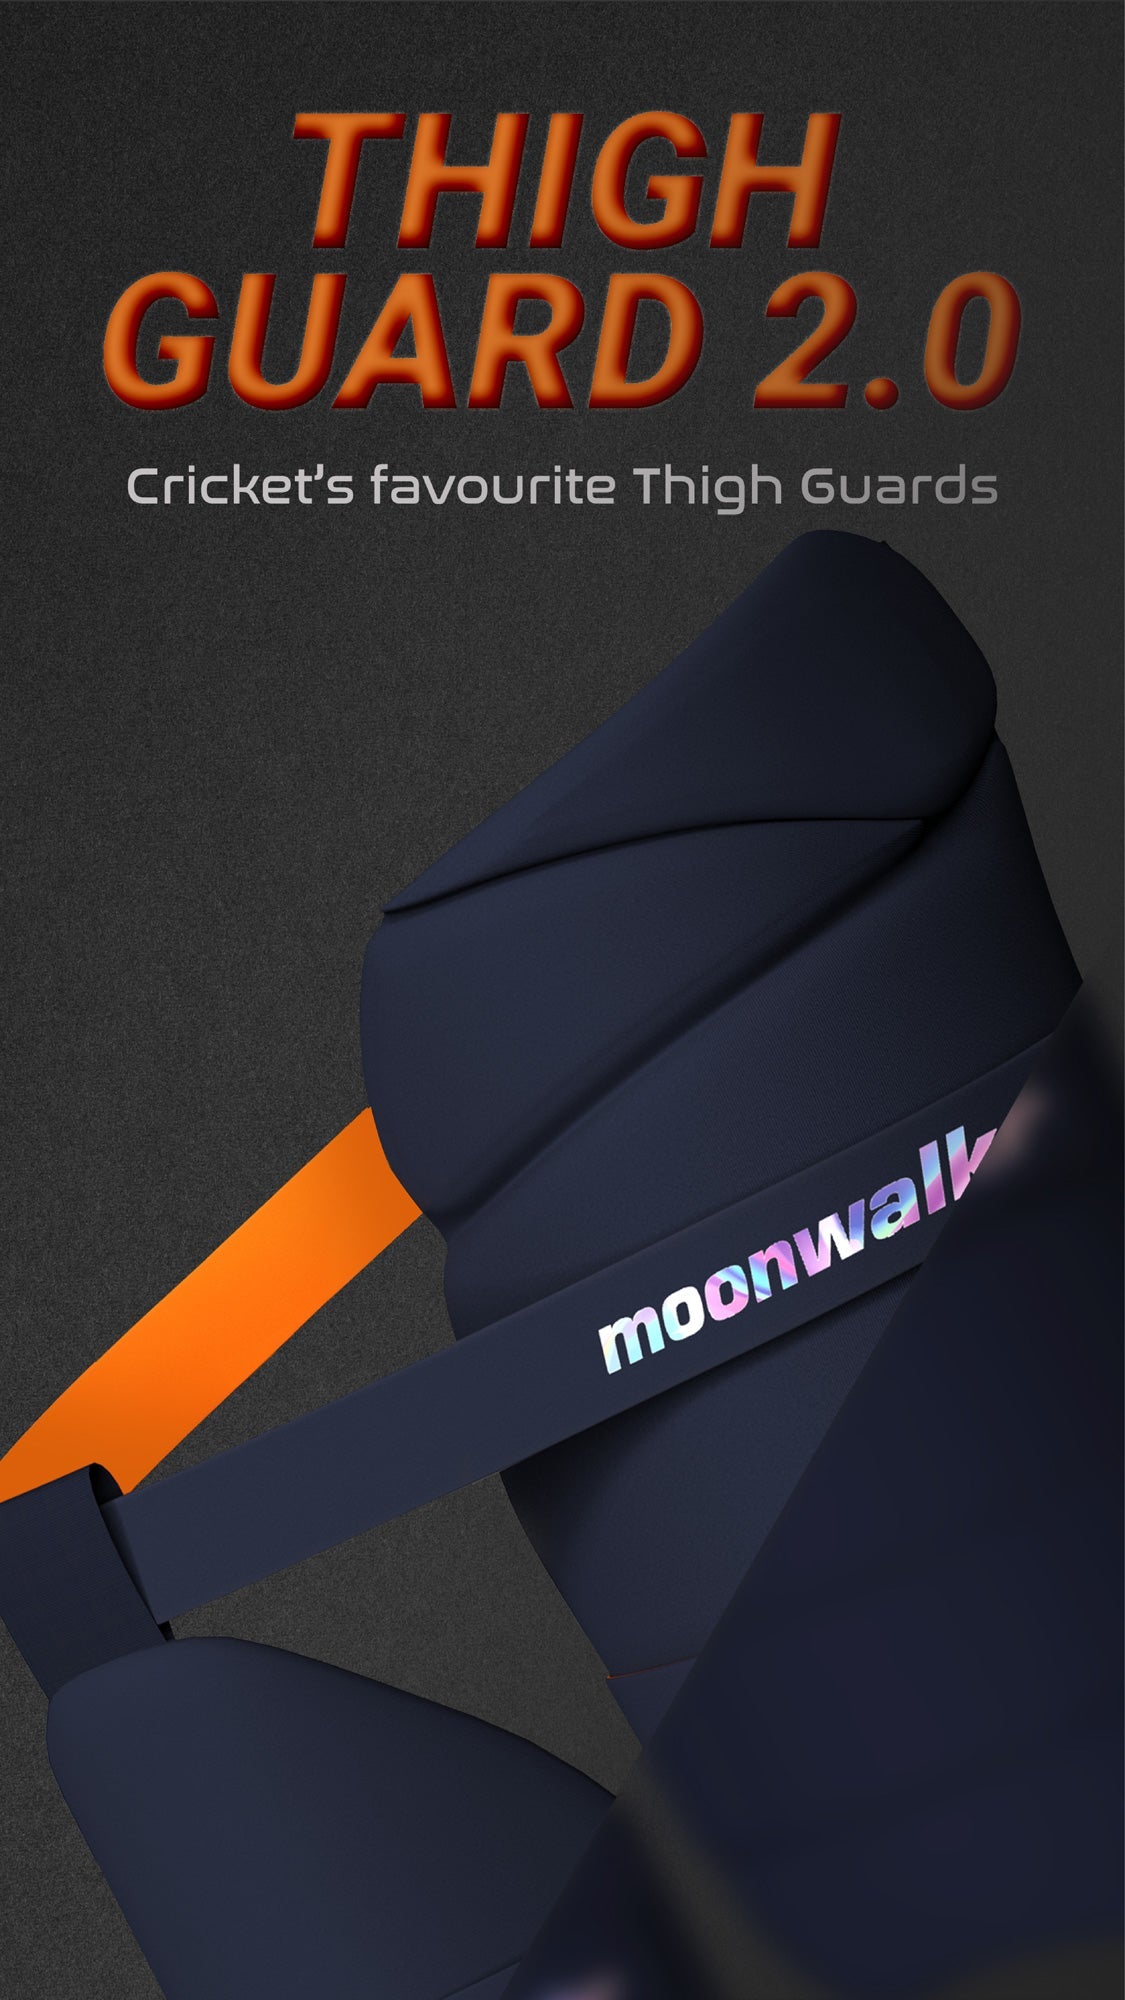 Thigh guard cricket